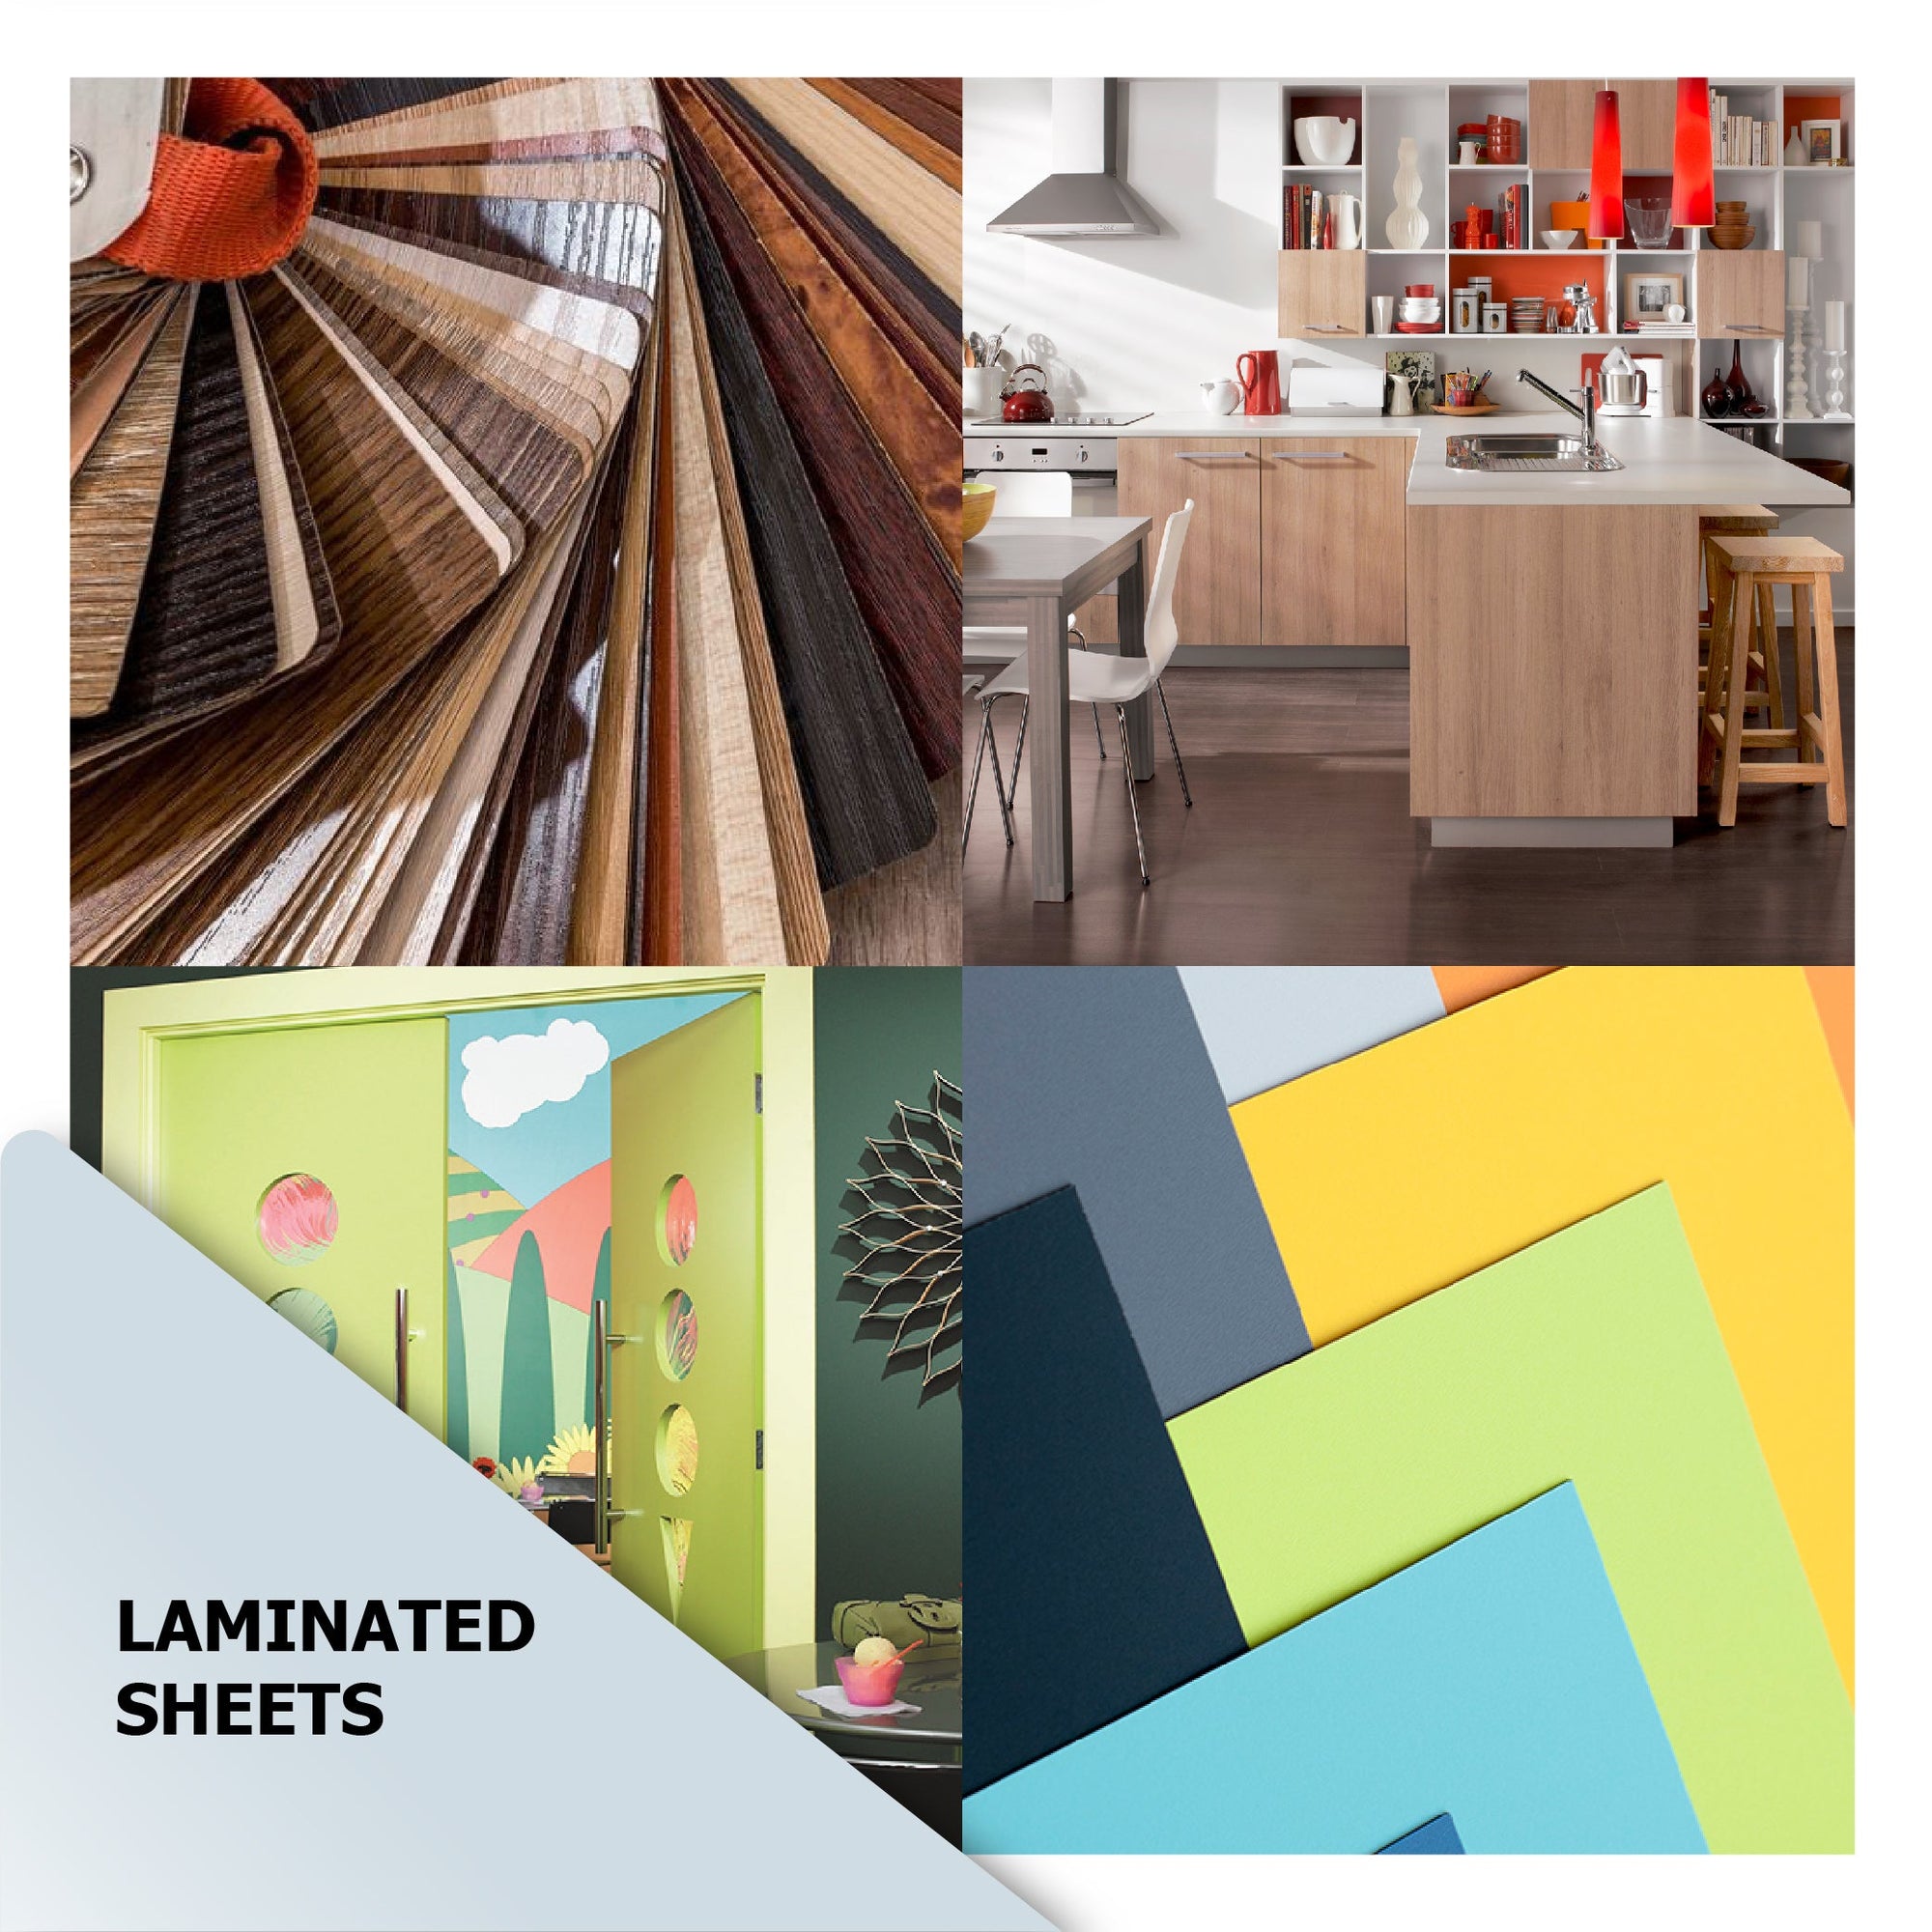 Formica Laminated Sheets - Durable, Stylish & Versatile"